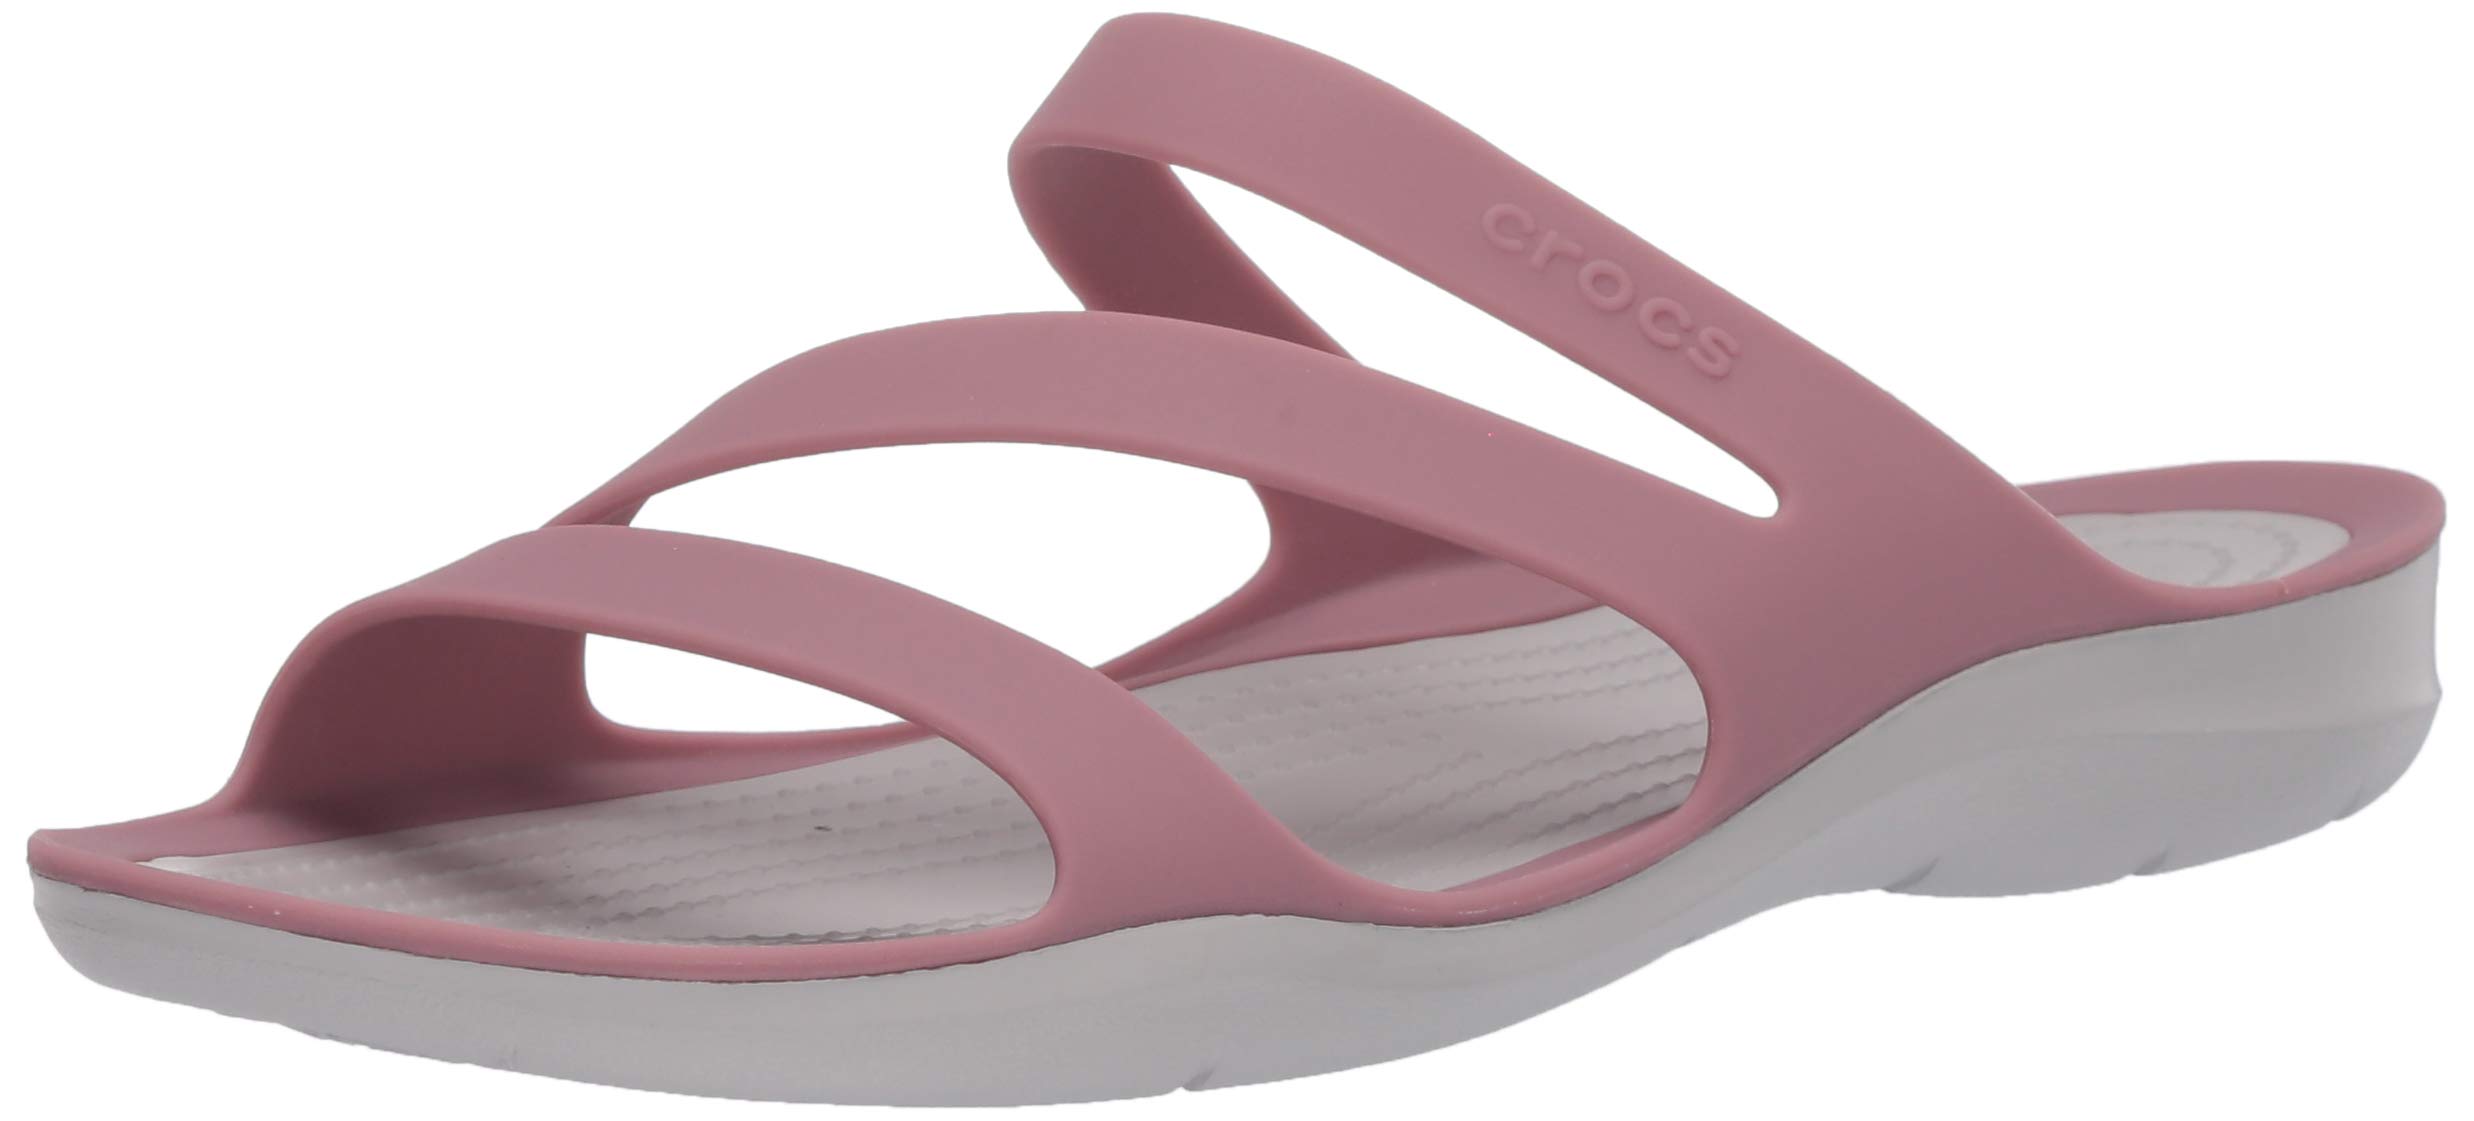 Crocs Women's Swiftwater Sandal, Lightweight and Sporty Sandals for Women